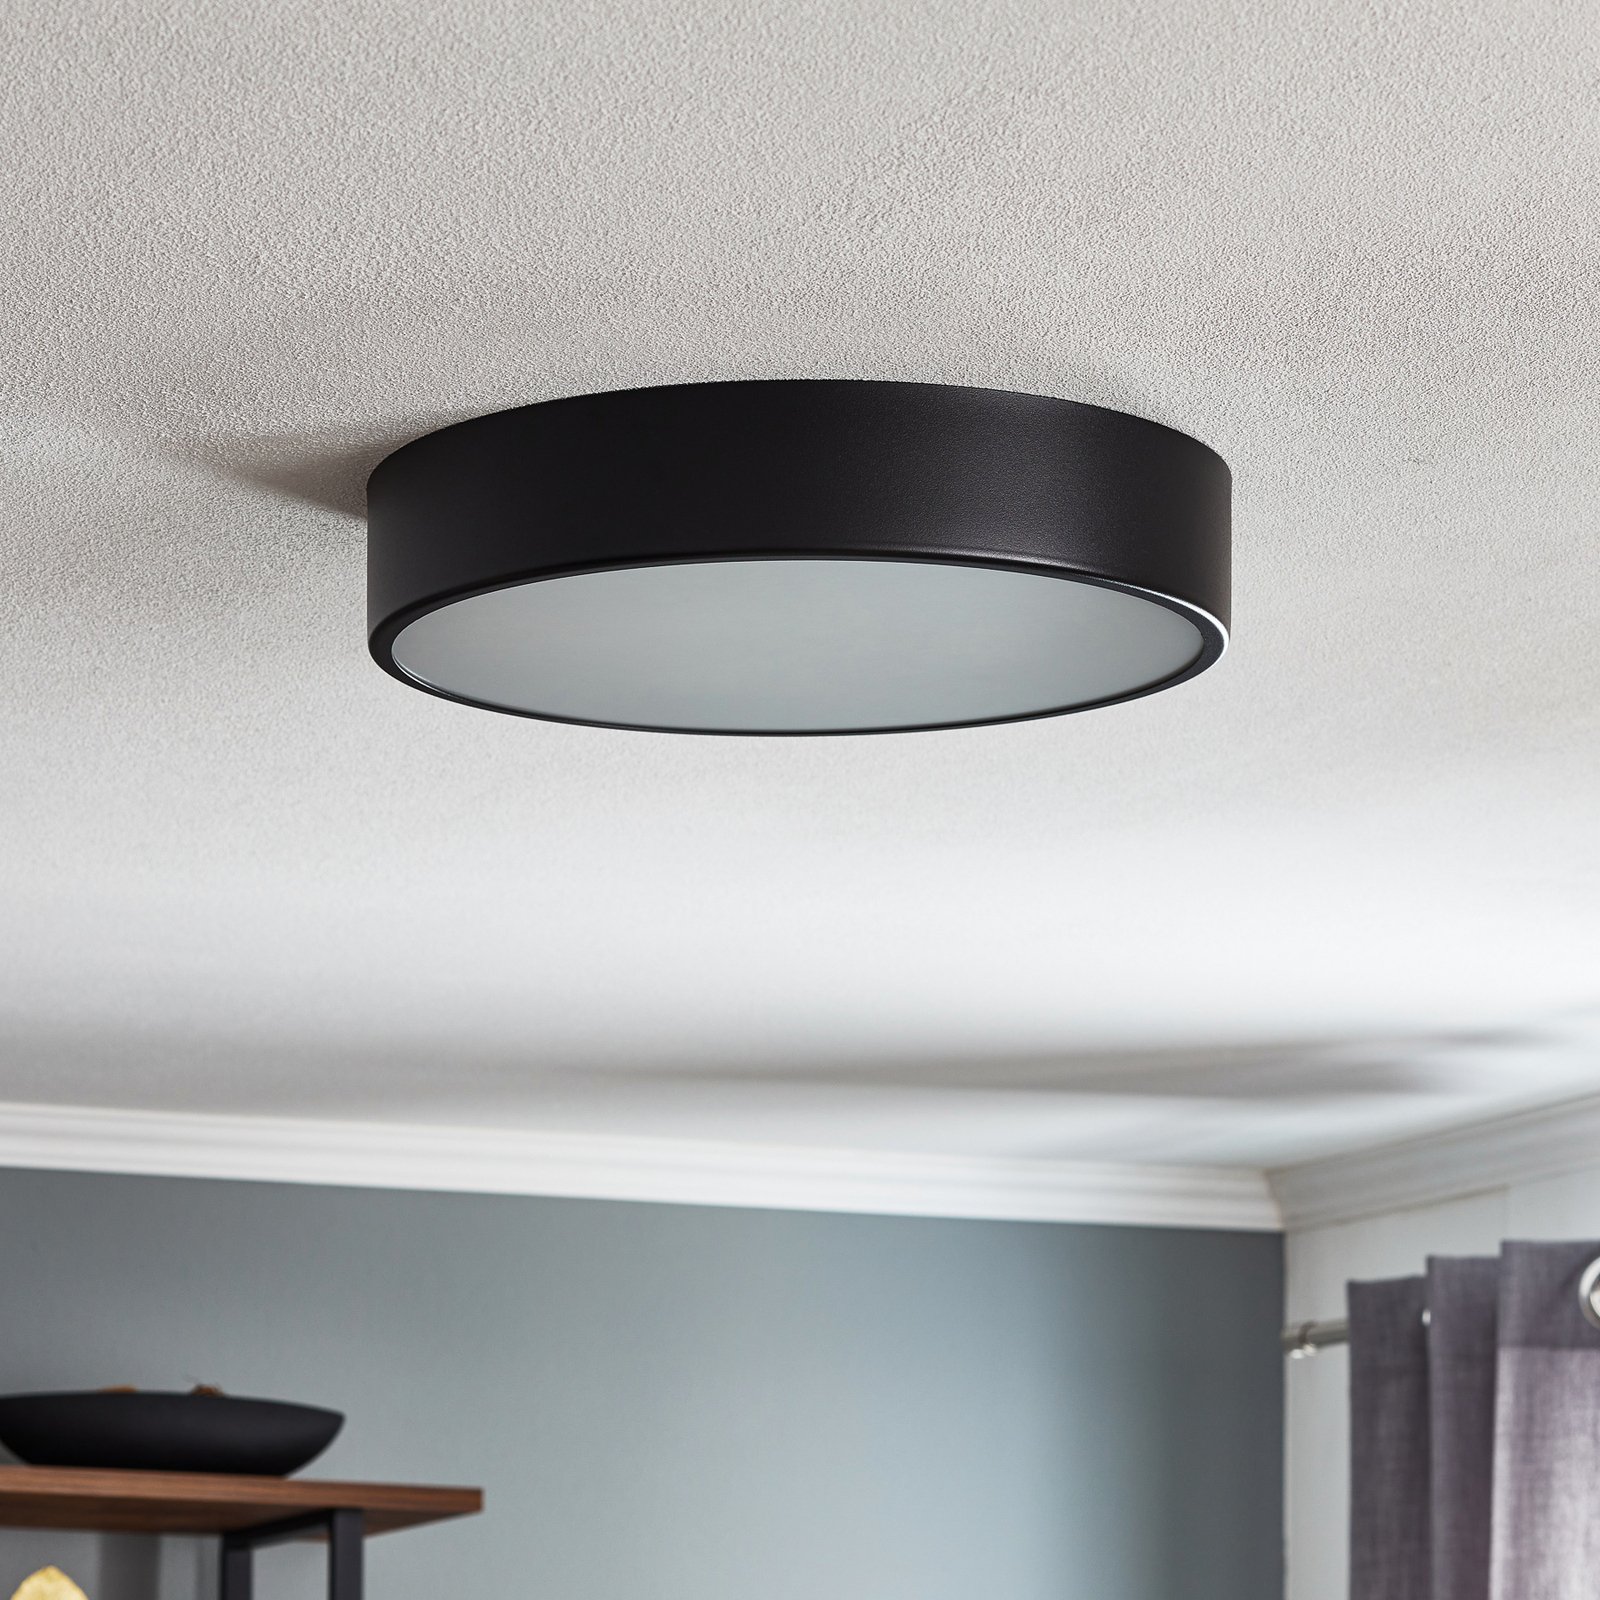 Cleo 400 ceiling light, sensor, Ø 40 cm black